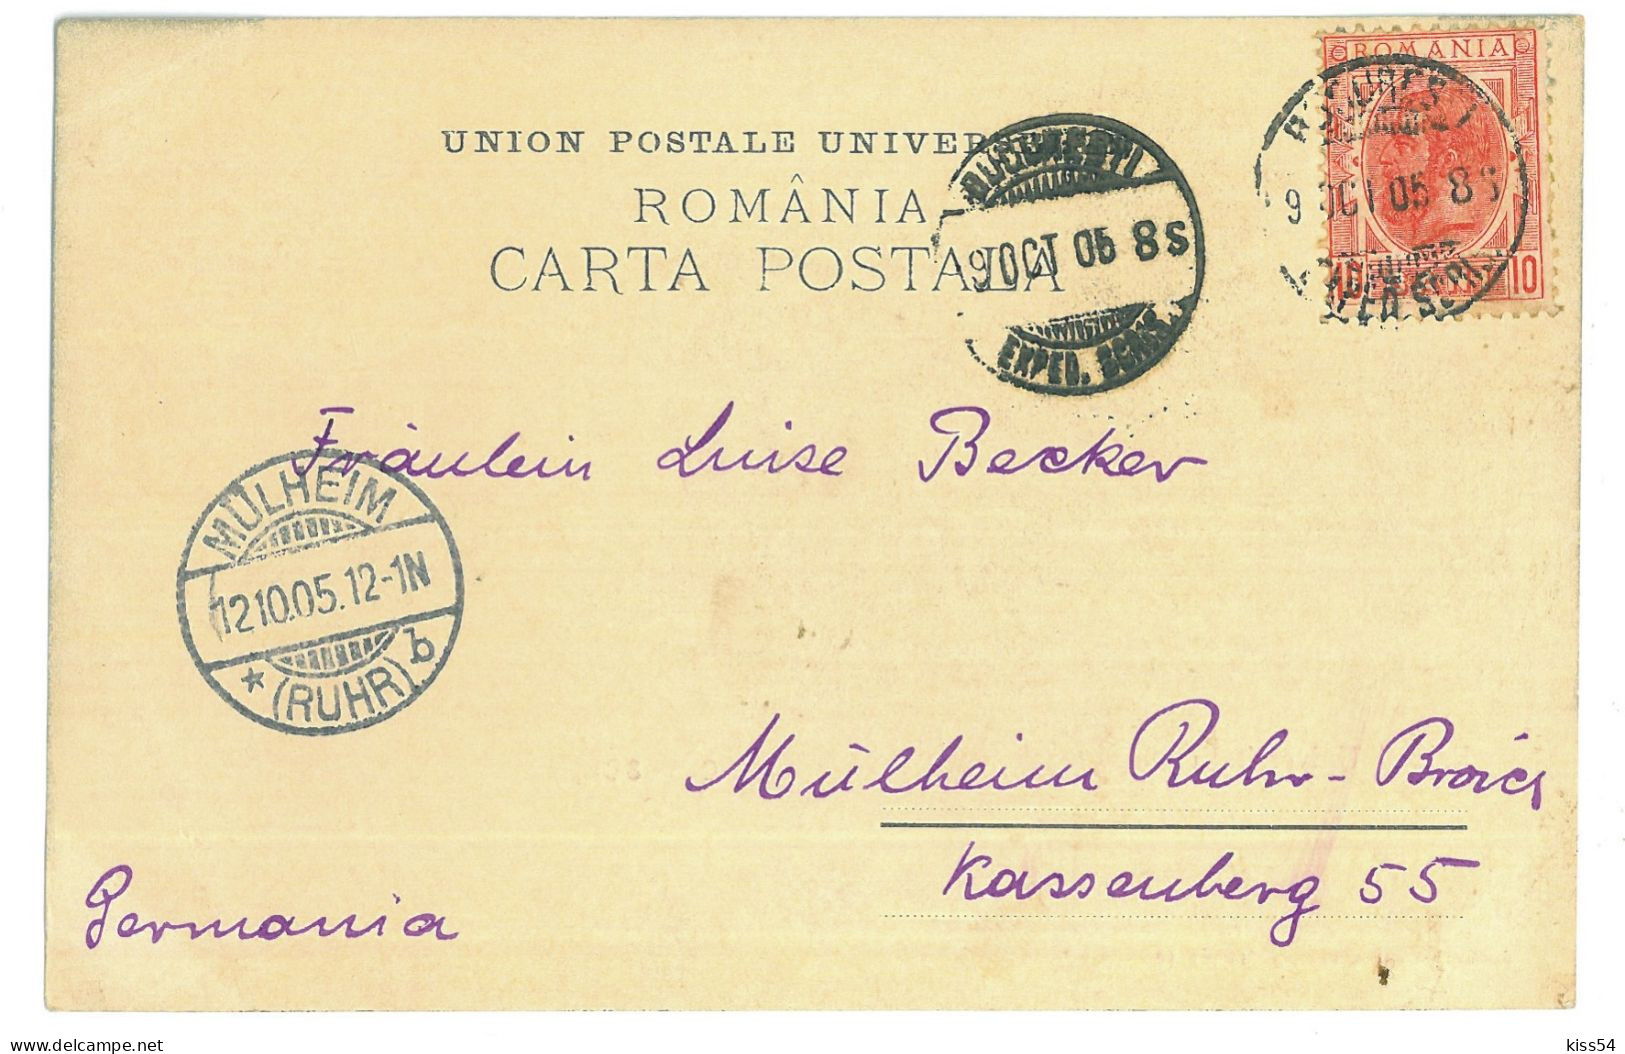 RO 86 - 23780 BUCURESTI, University, Romania - Old Postcard - Used - 1905 - Romania